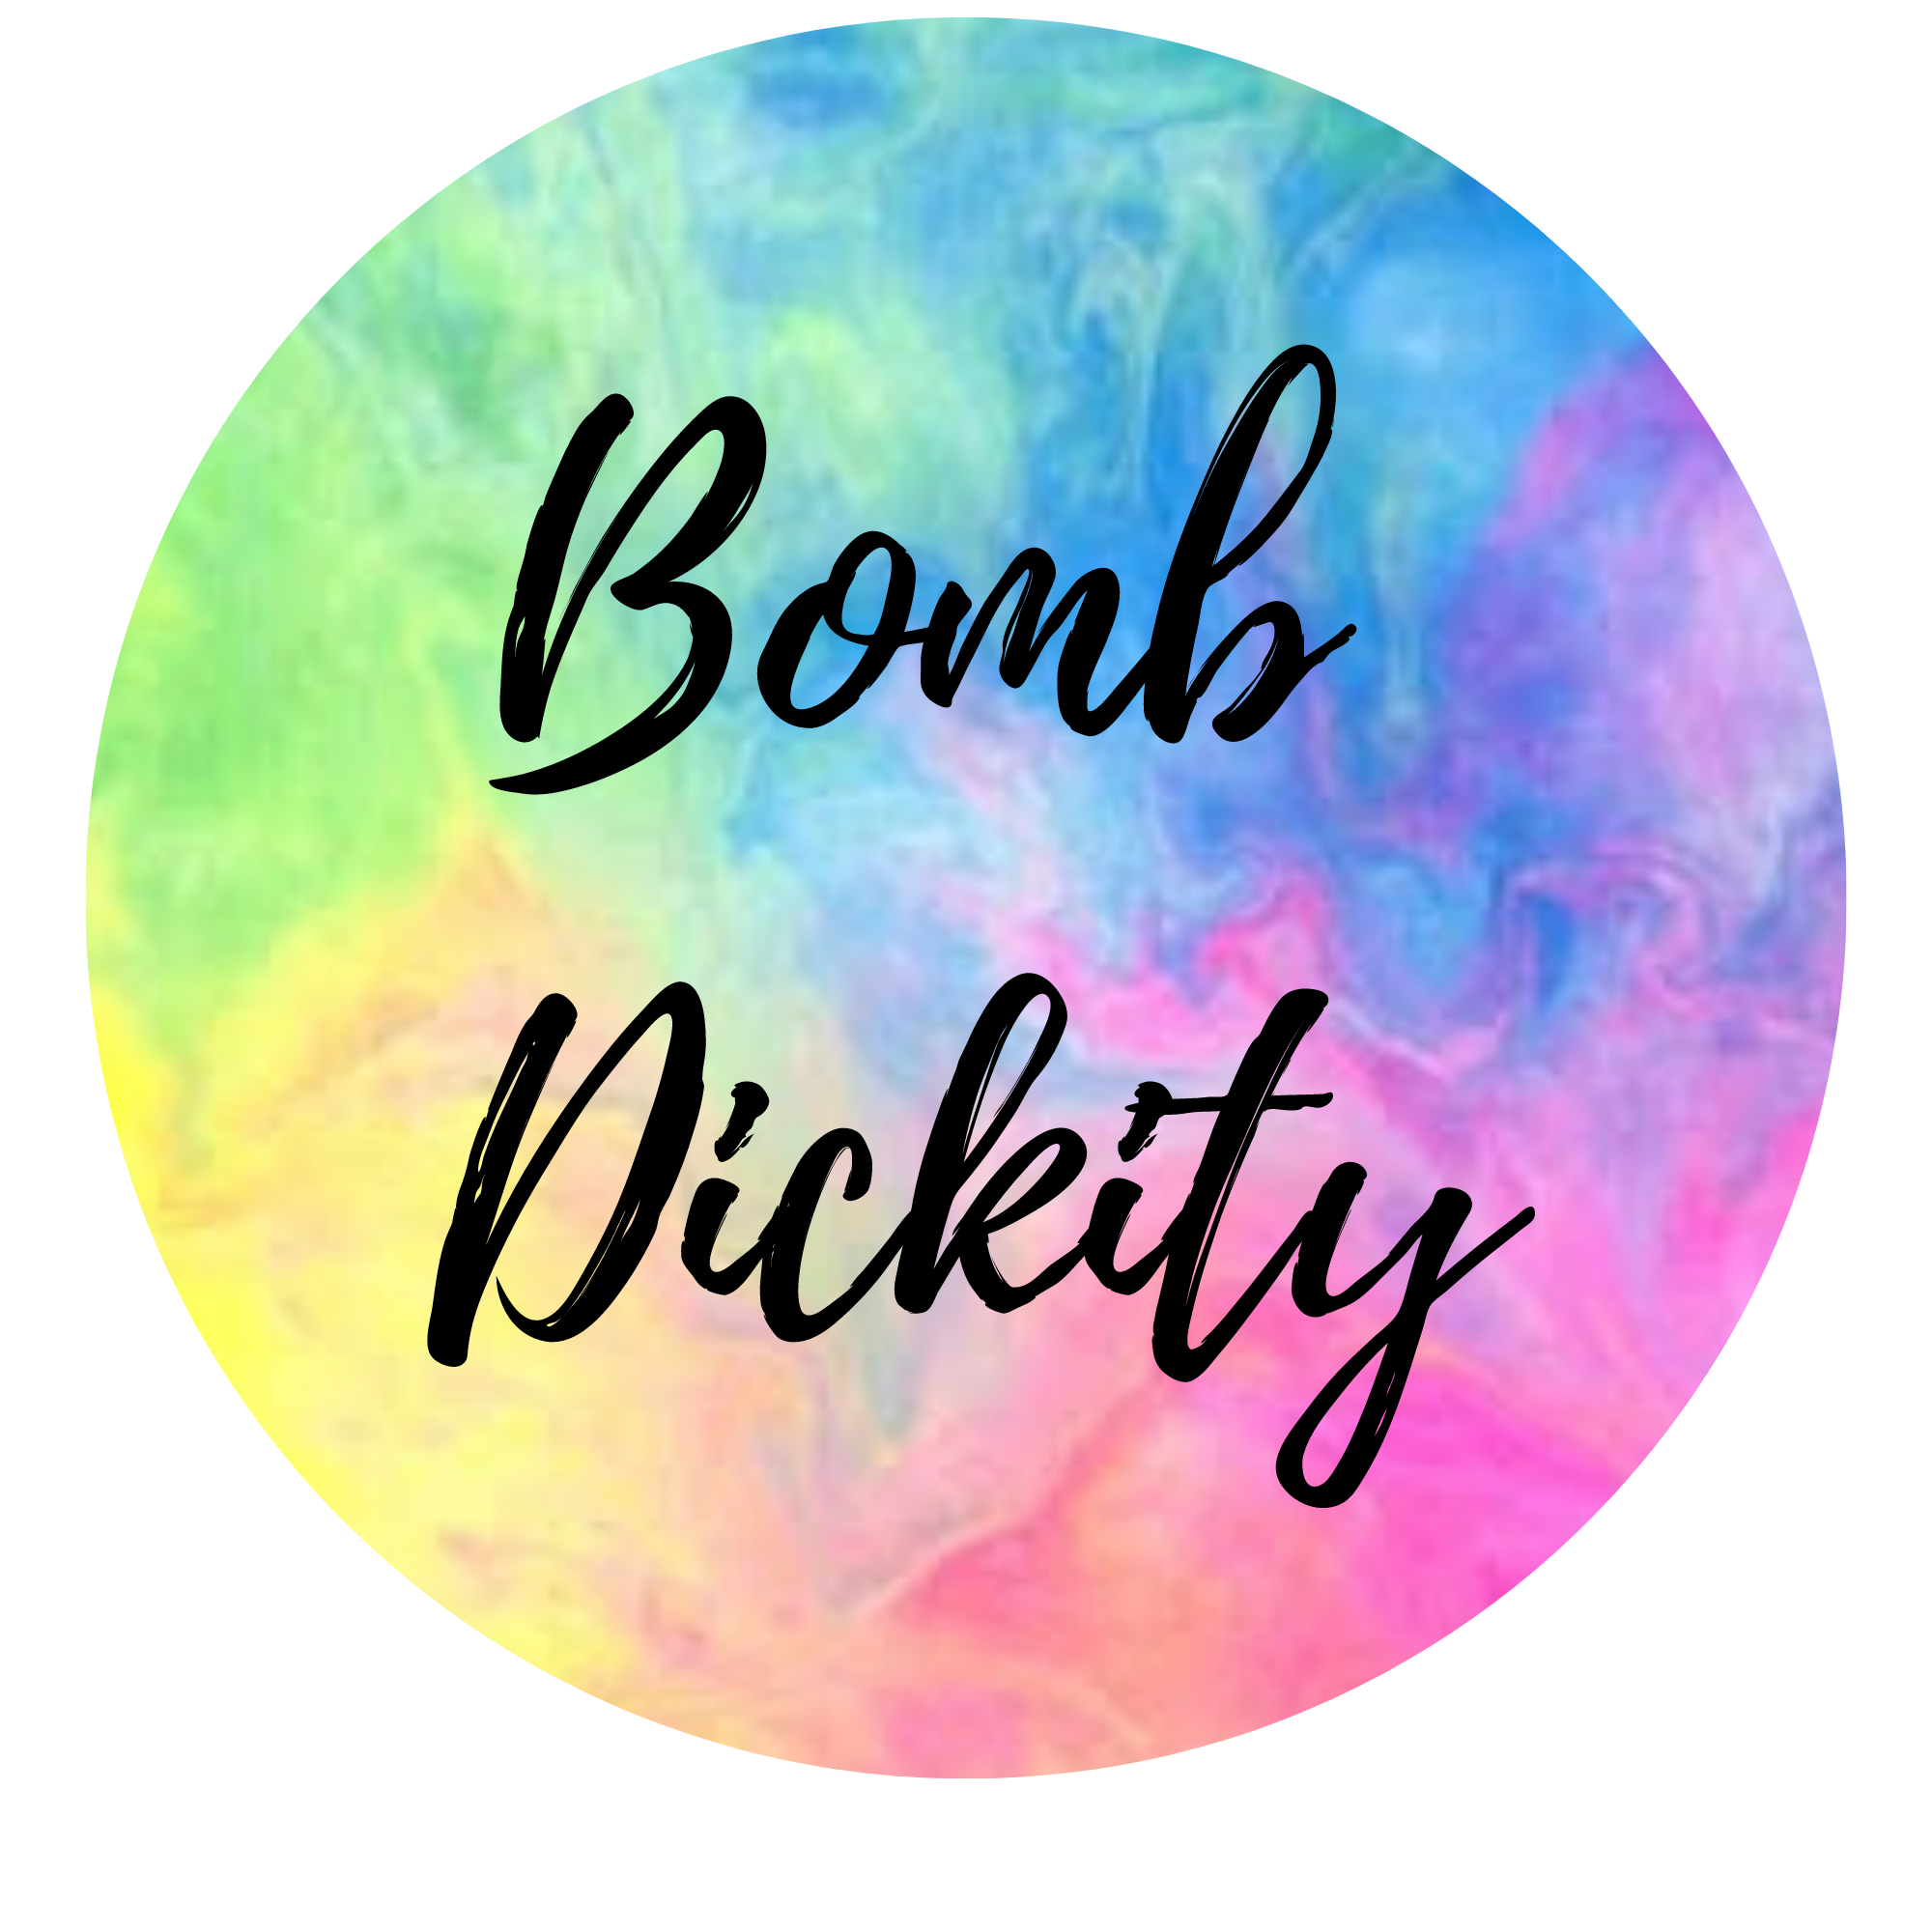 Bomb - Dickity